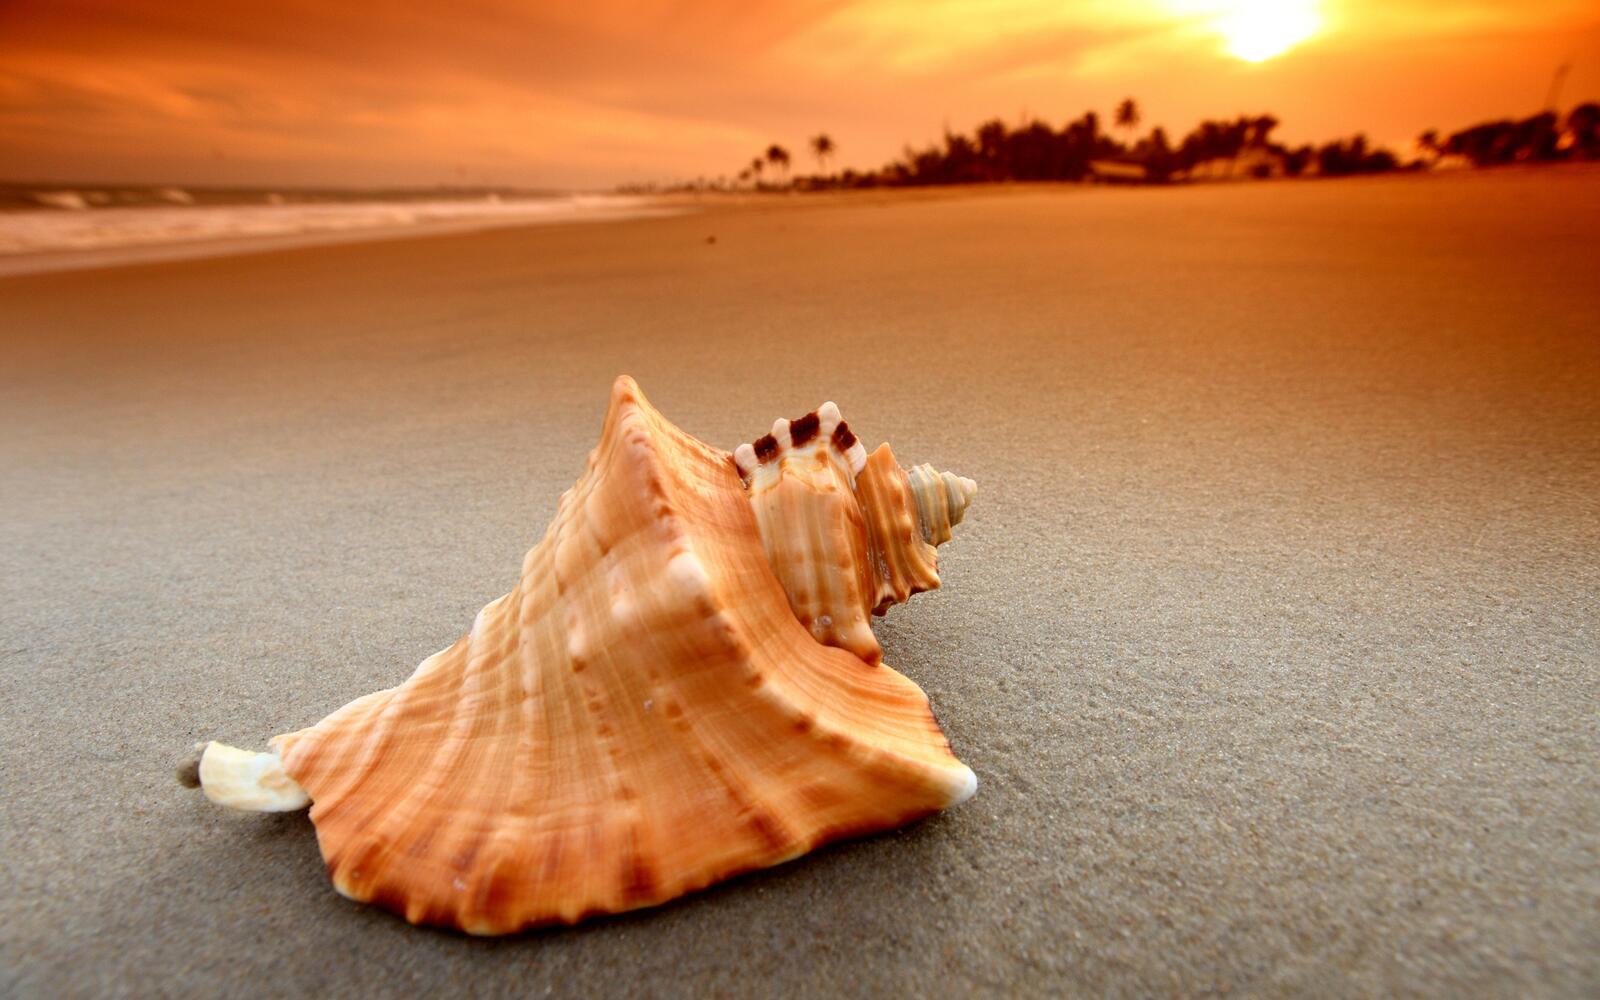 Free photo A seashell on a sandy beach at sunset